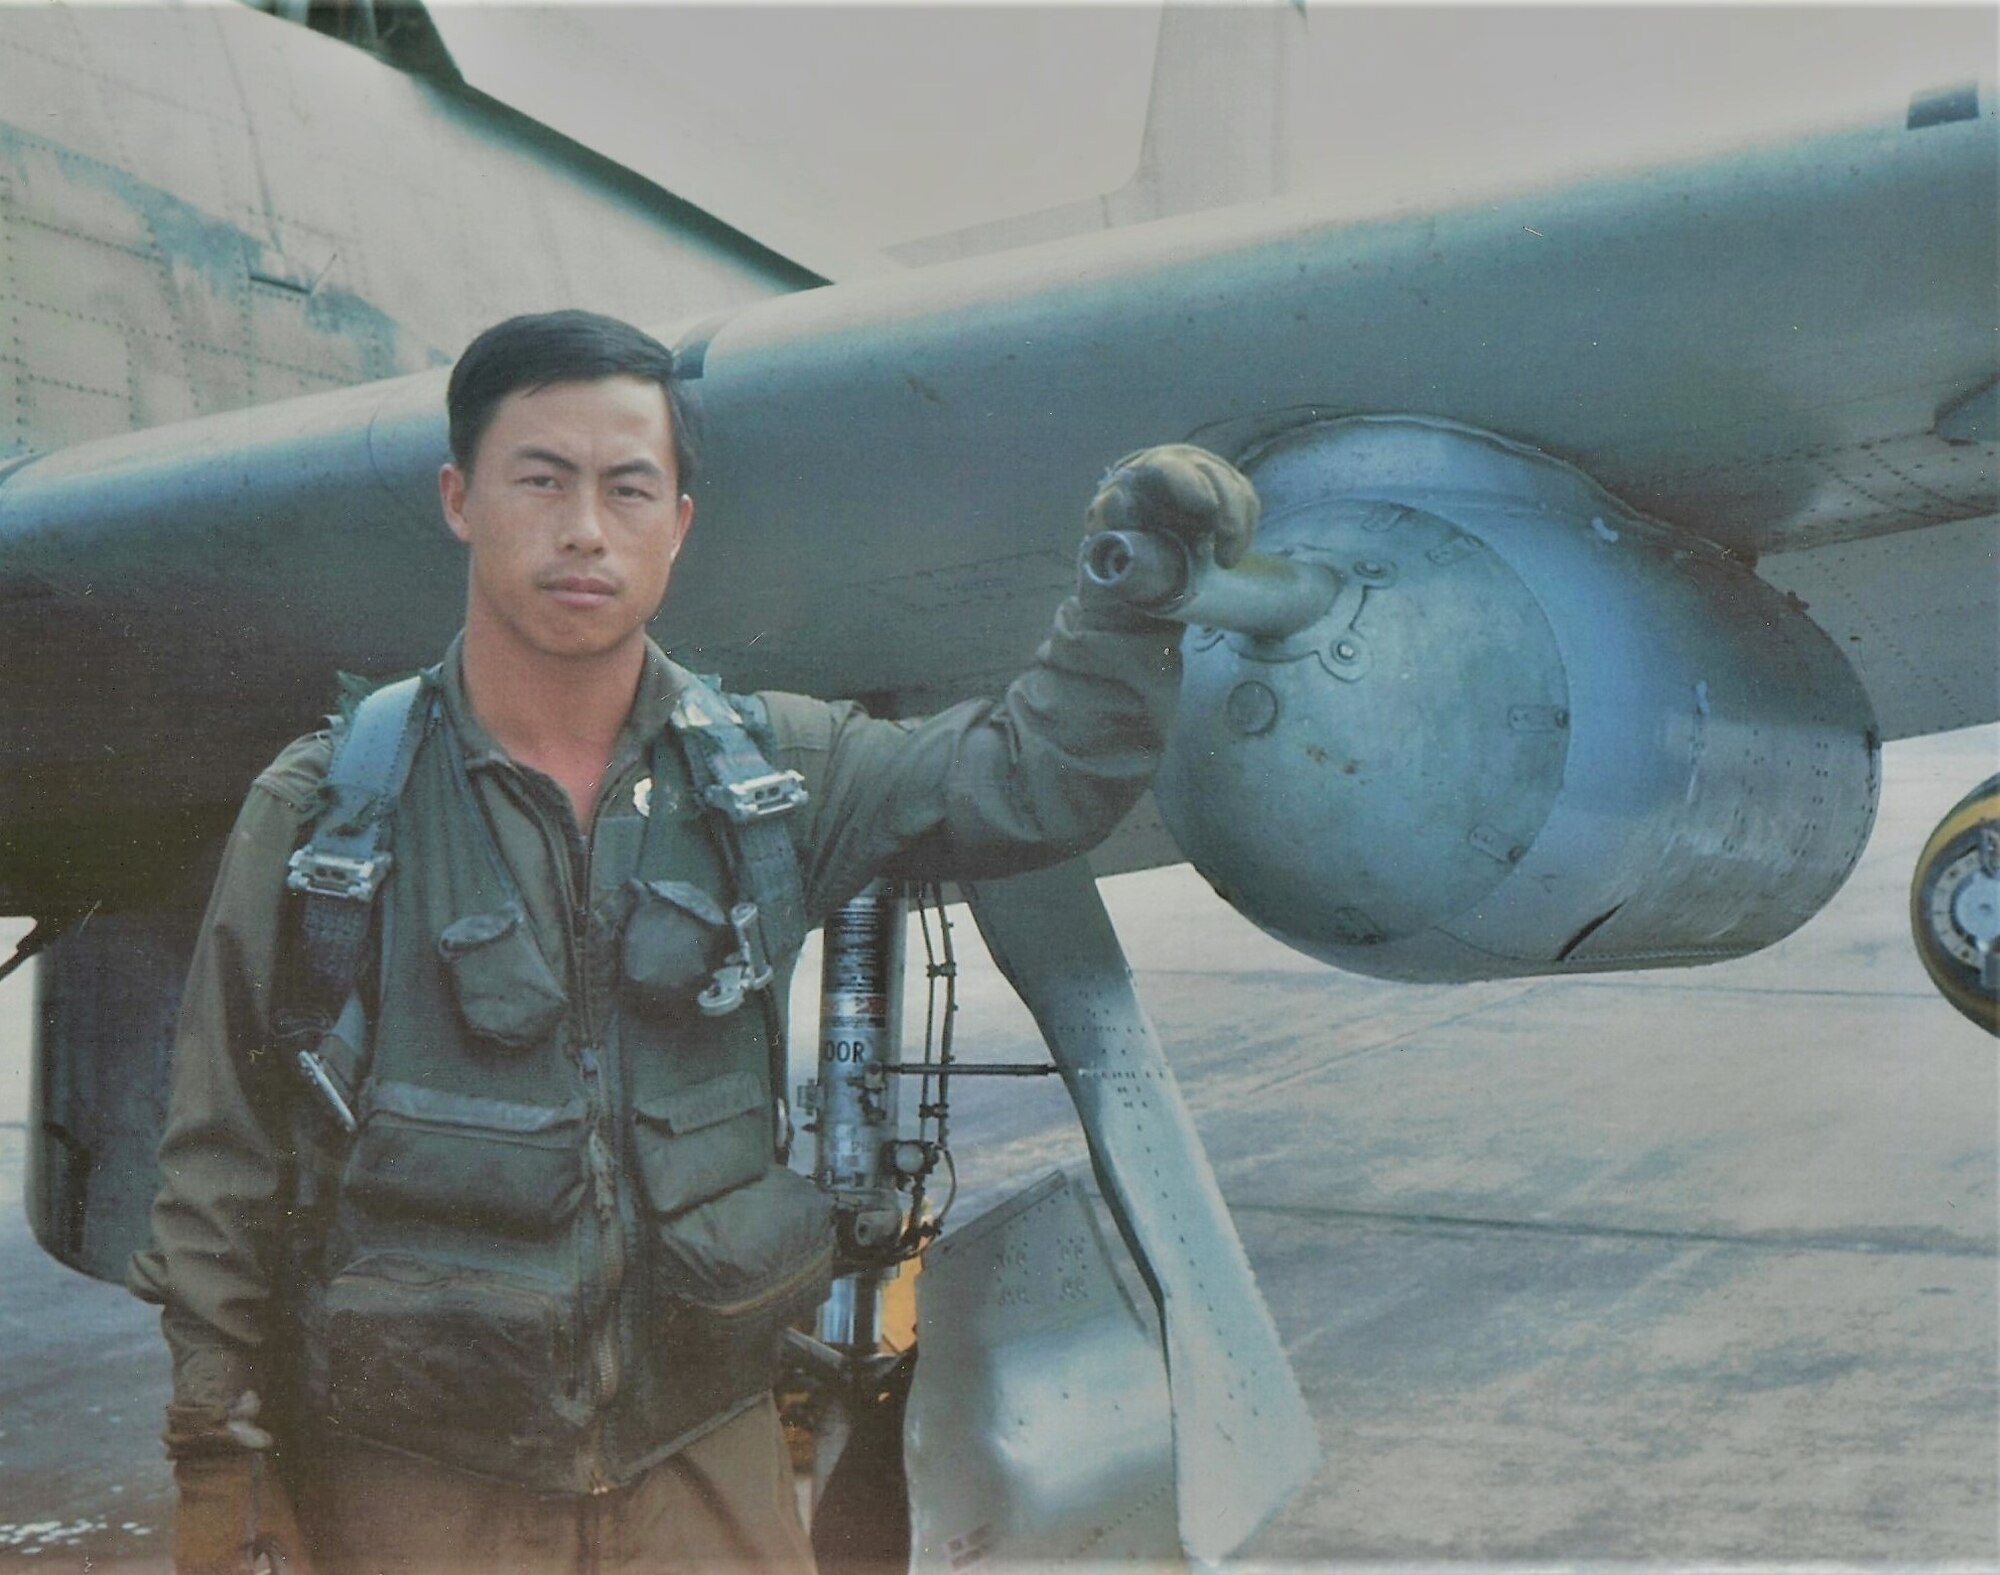 Hmong pilot Lt Yia Kha